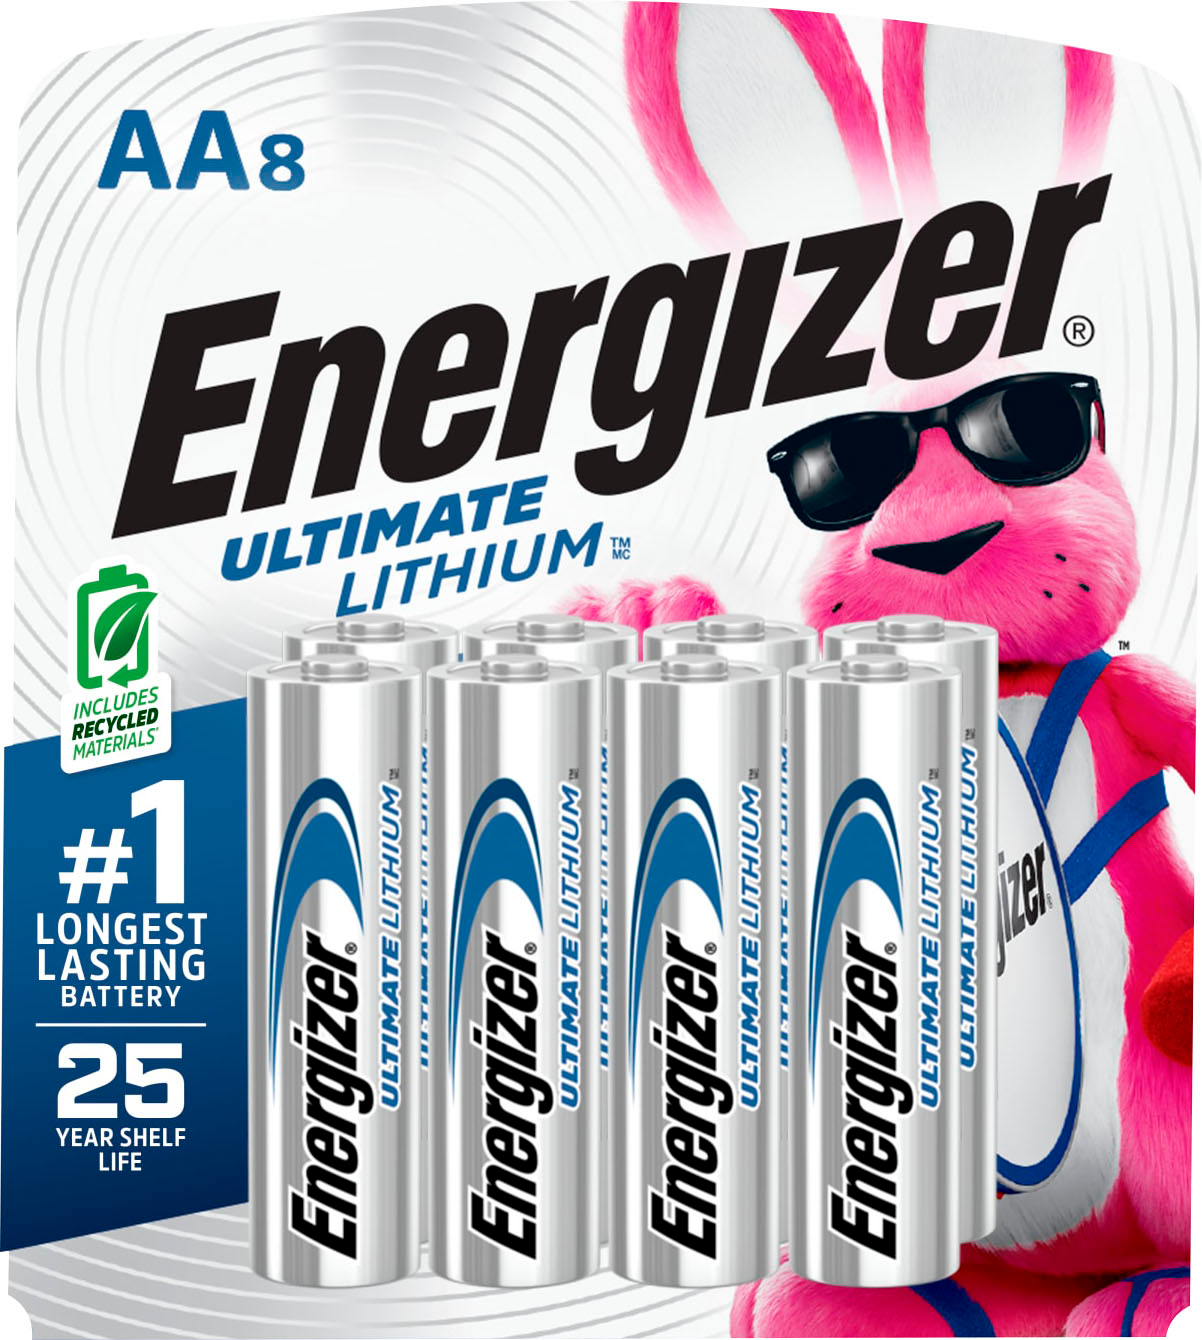 Great Value Alkaline AA Batteries (8 Pack)